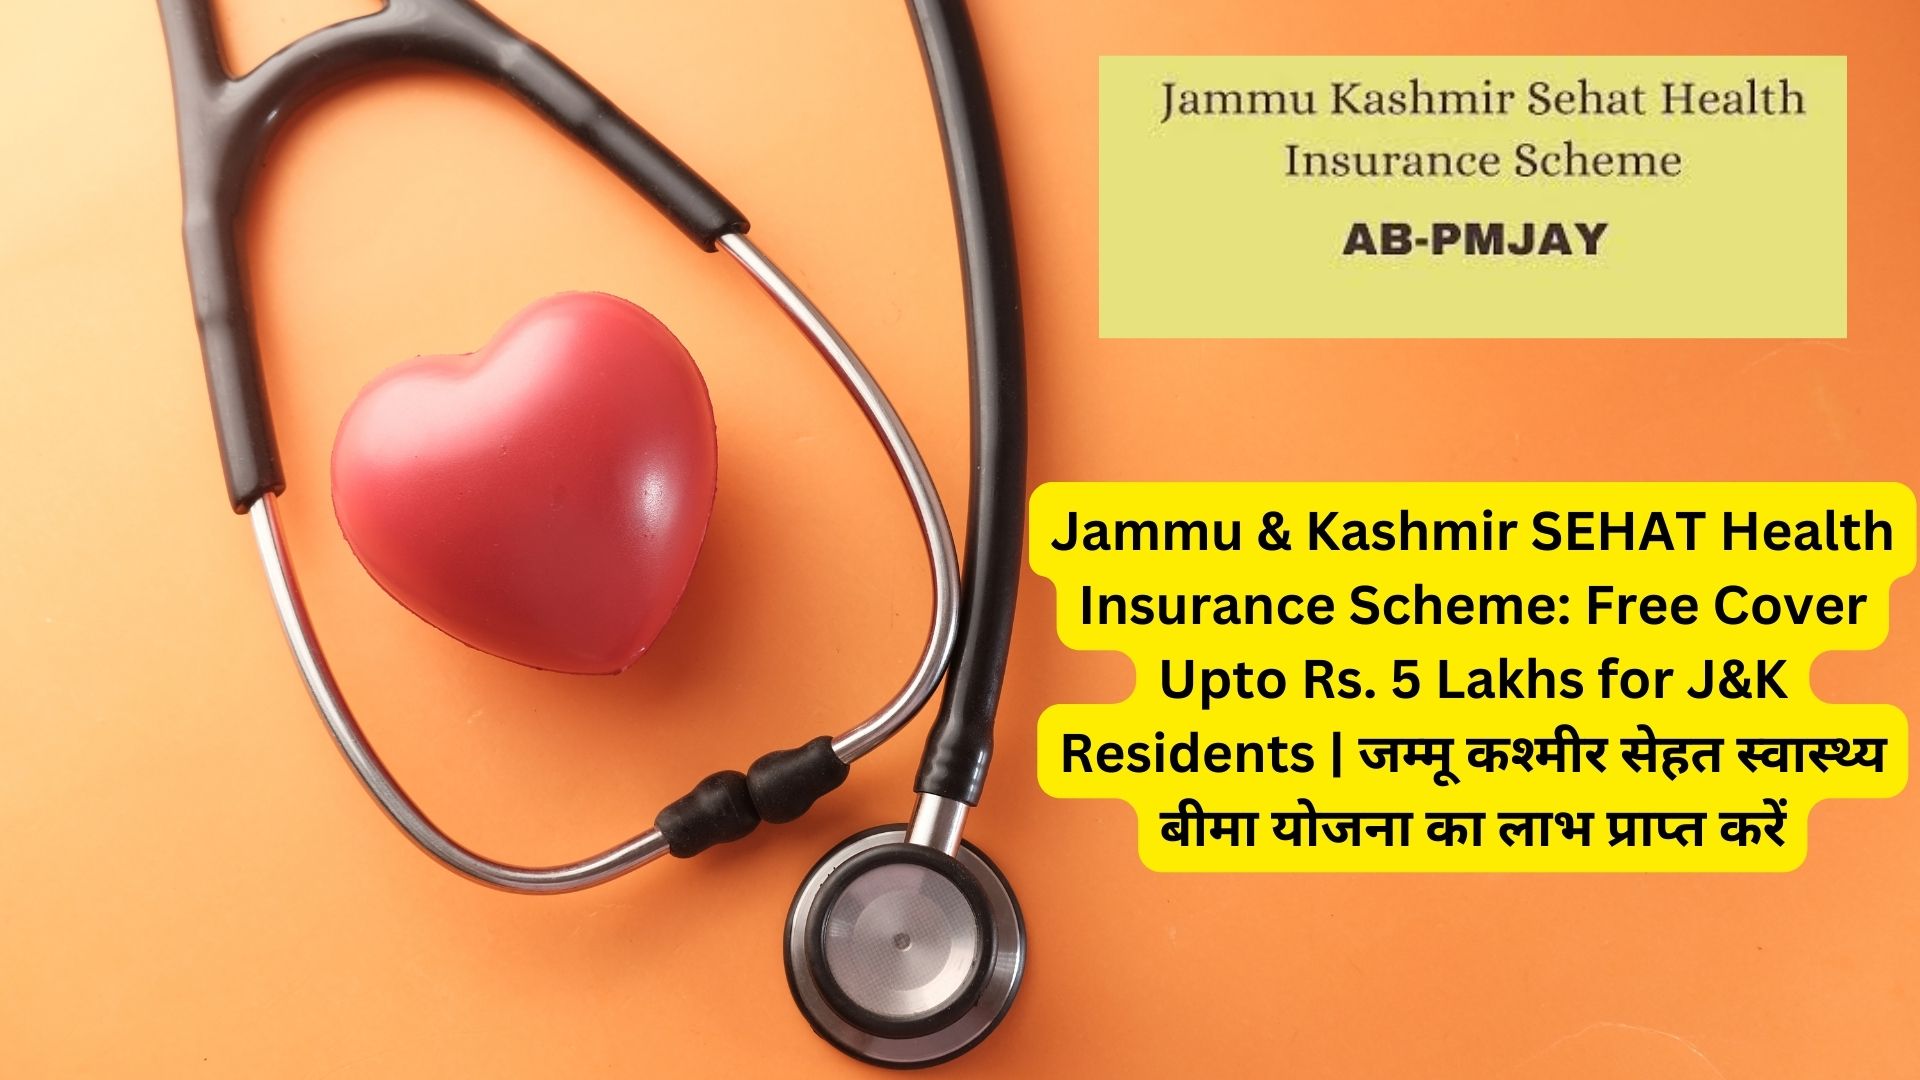 Jammu & Kashmir SEHAT Health Insurance Scheme: Free Cover Upto Rs. 5 Lakhs for J&K Residents | जम्मू कश्मीर सेहत स्वास्थ्य बीमा योजना का लाभ प्राप्त करें